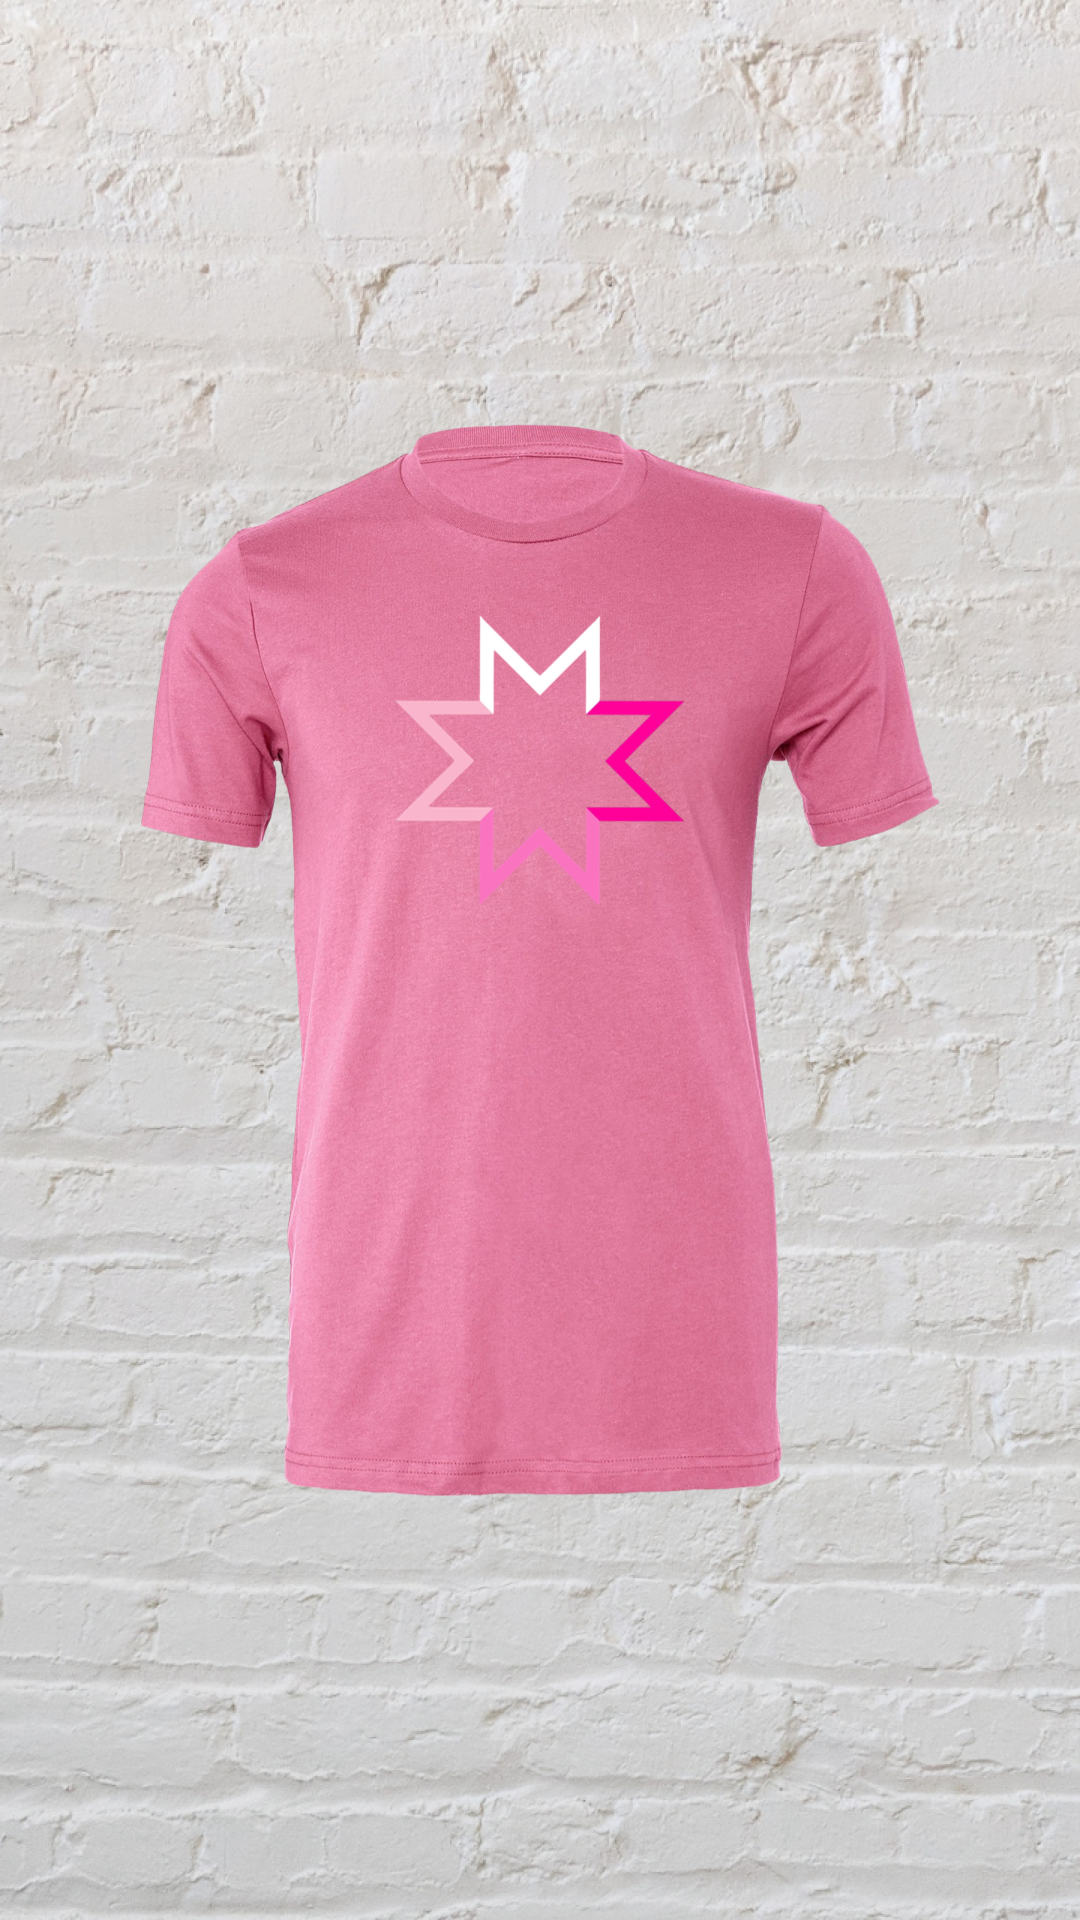 Be My Snag "Pink" star T-shirt